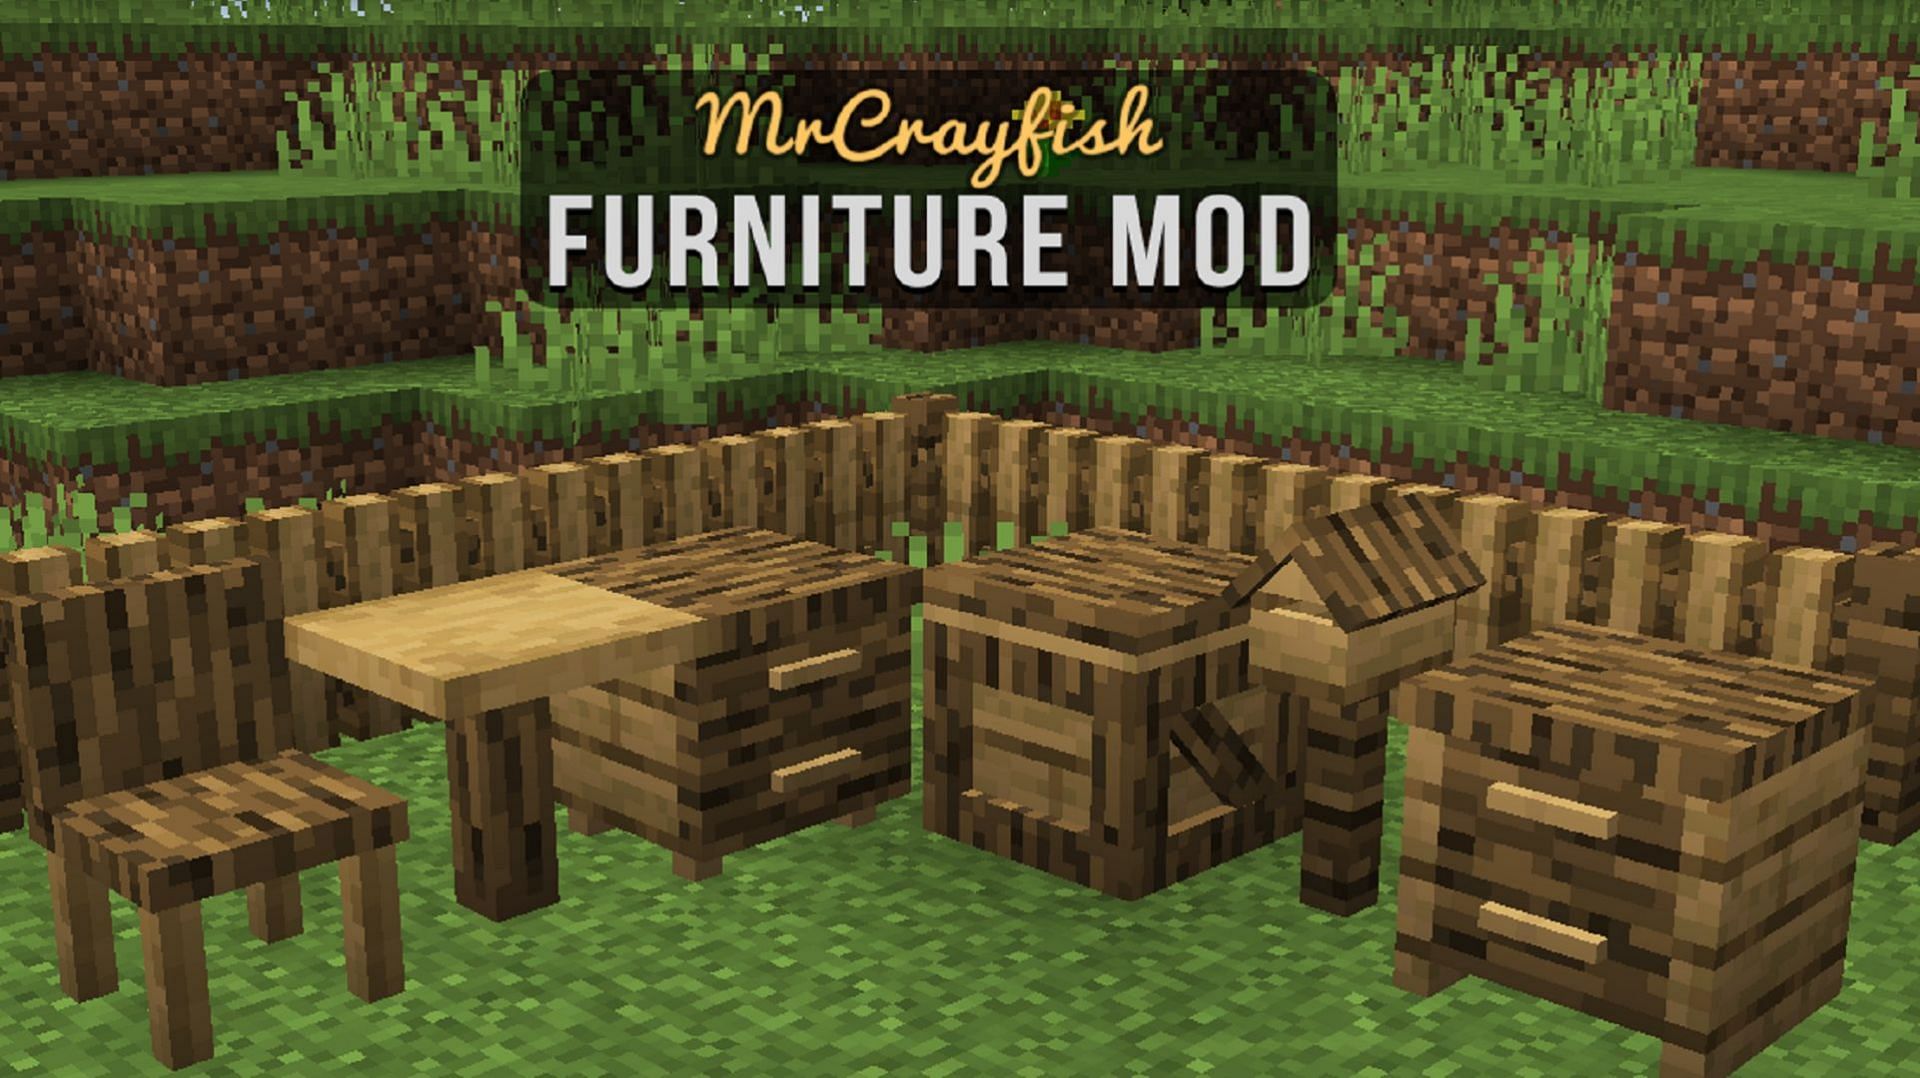 MrCrayfish&#039;s Furniture Mod adds additional furniture to Minecraft (Image via MrCrayfish/CurseForge)